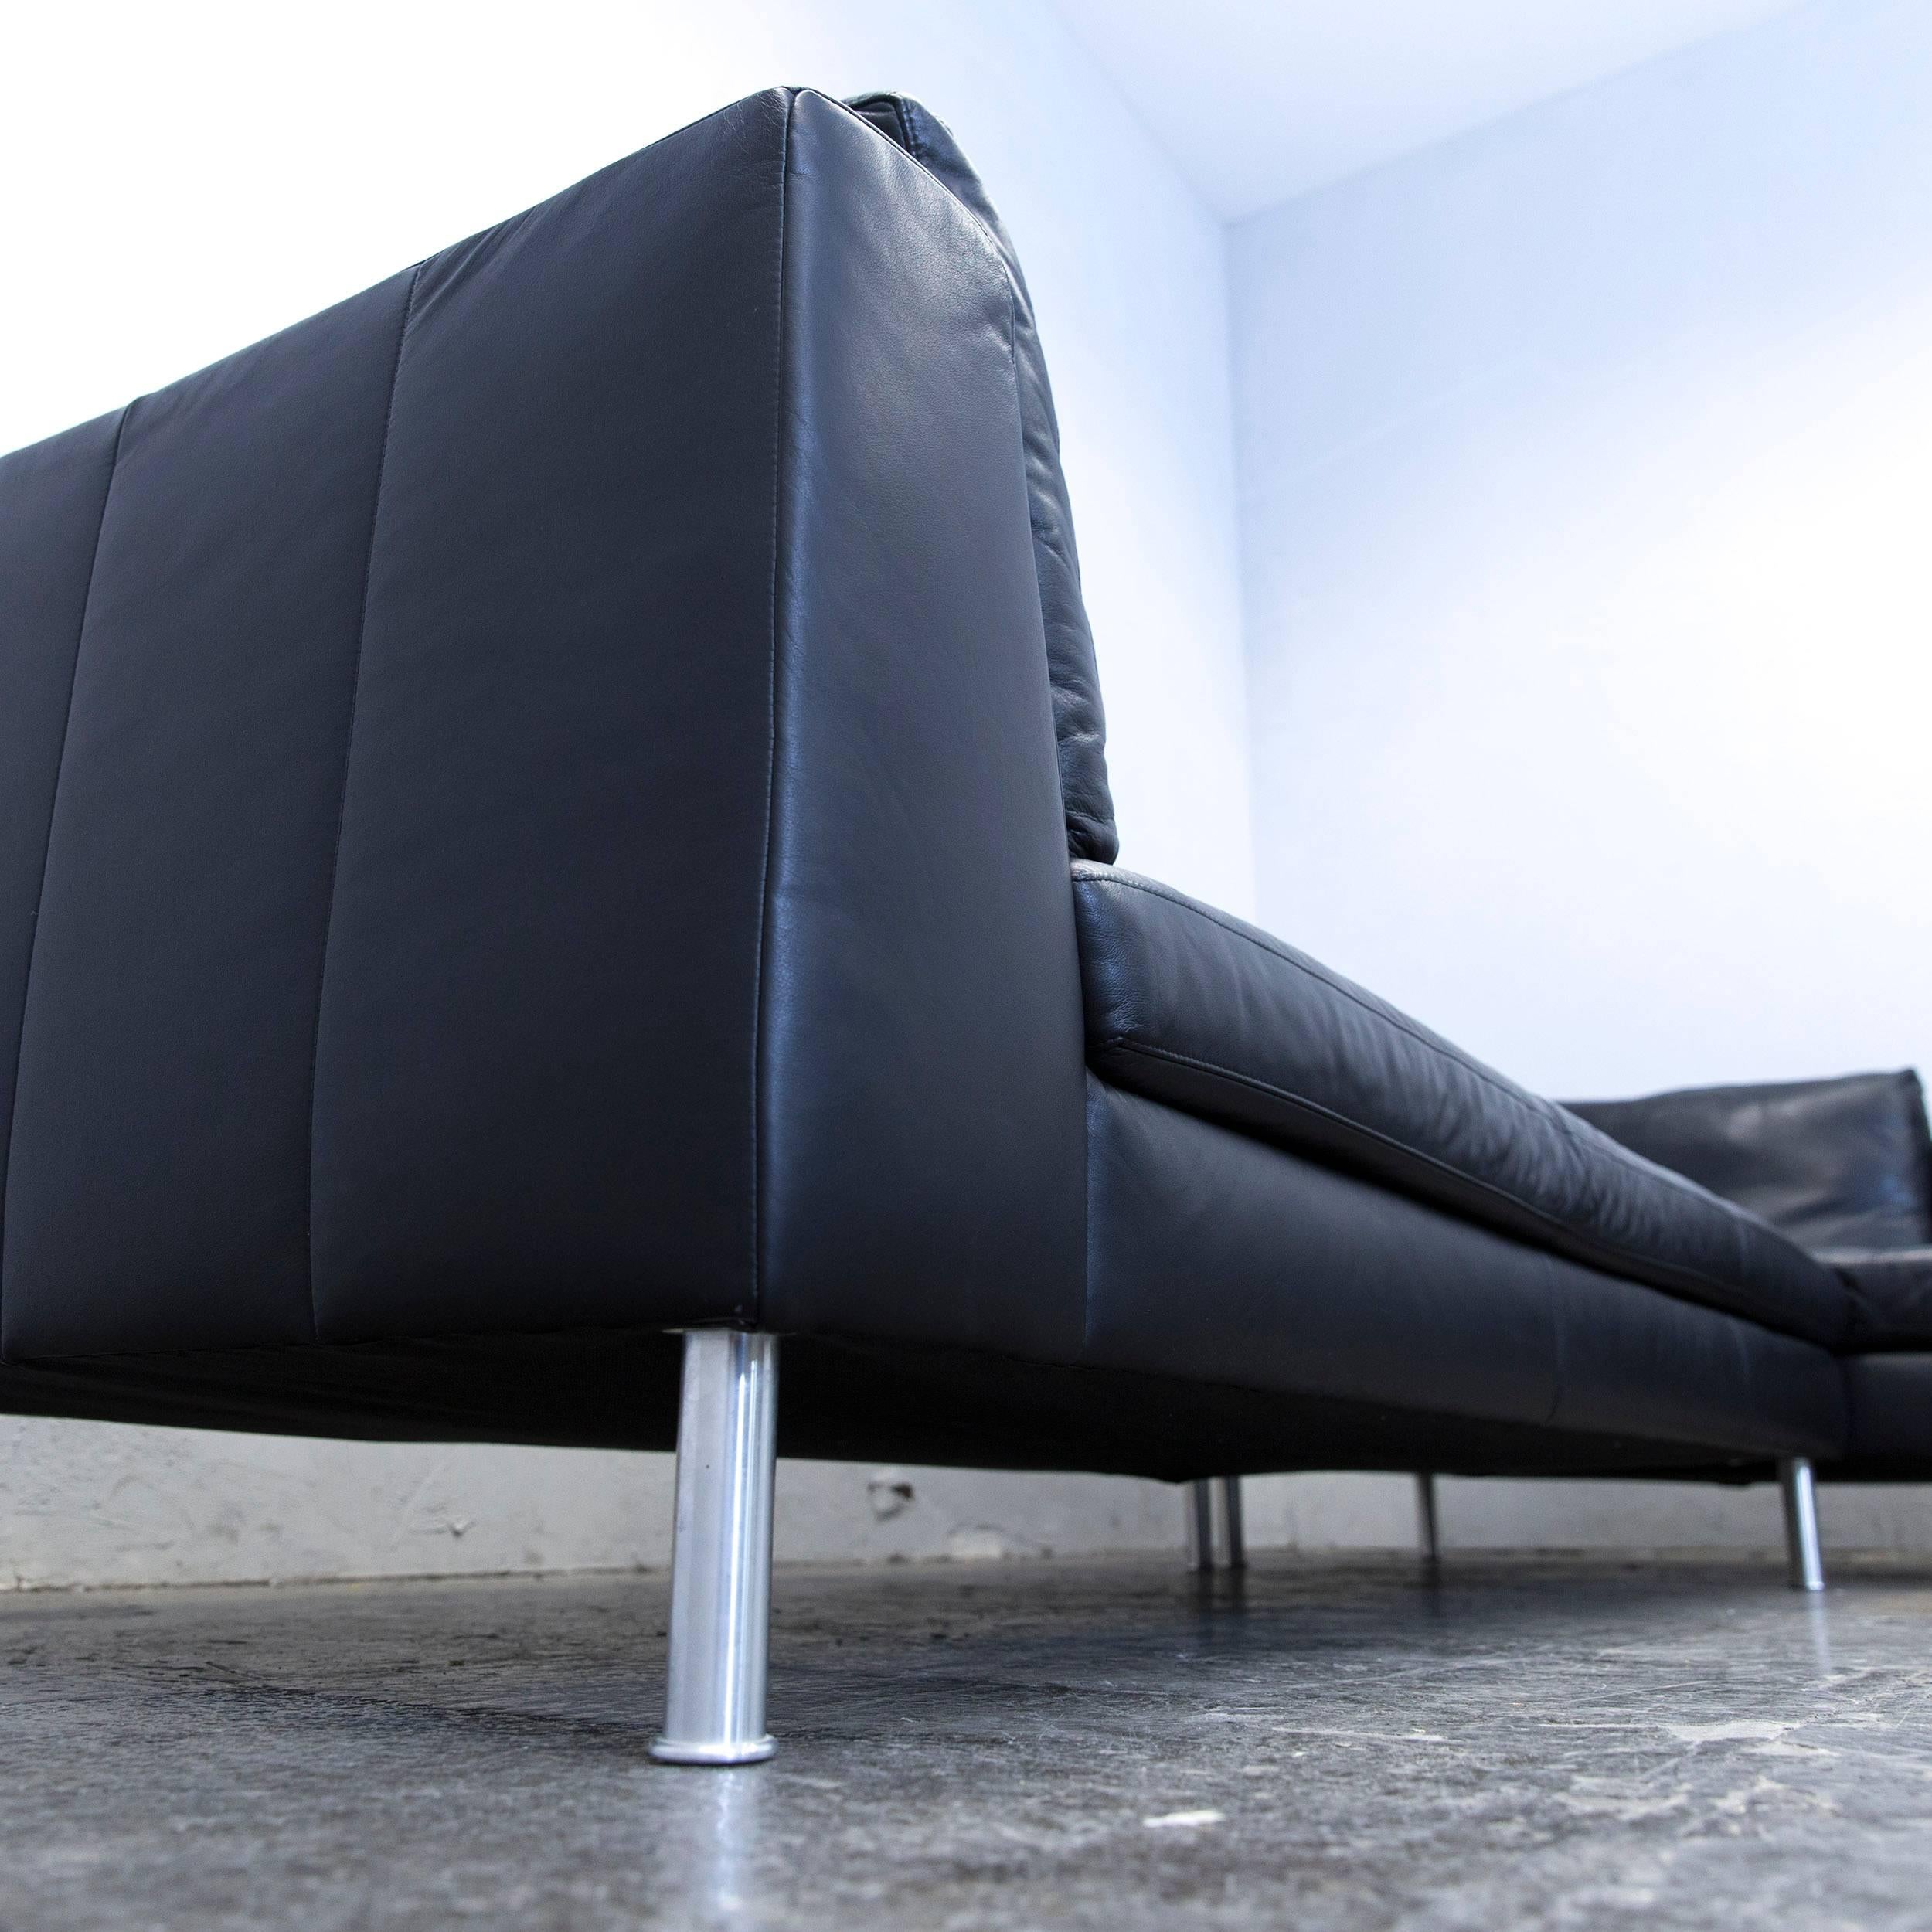 luxury sofa ewald schillig